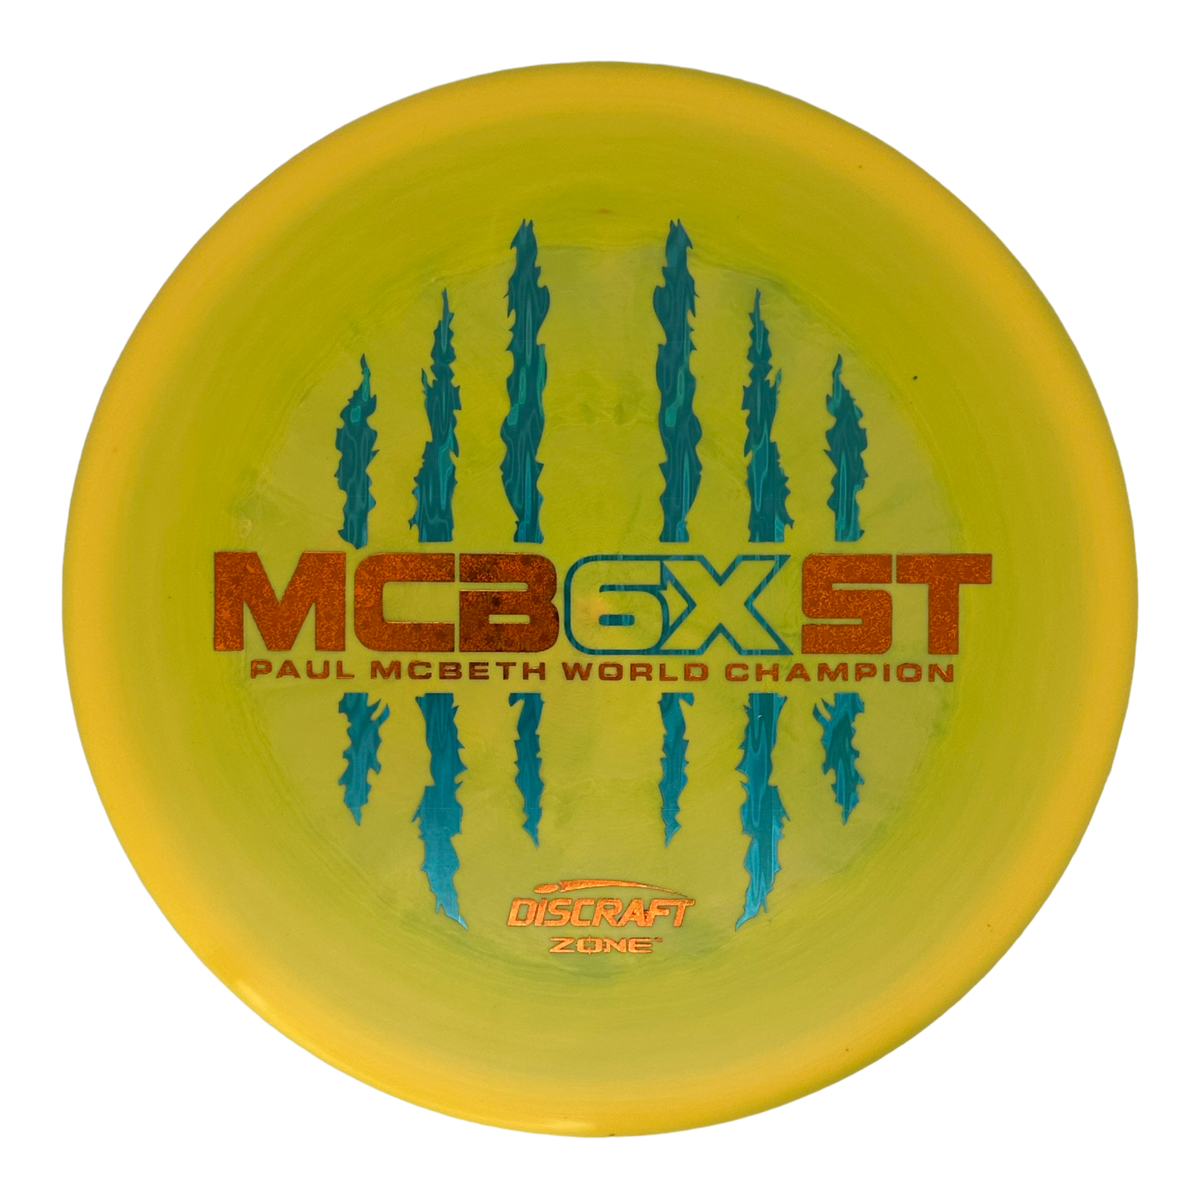 Discraft ESP Zone - Paul MCB6XST